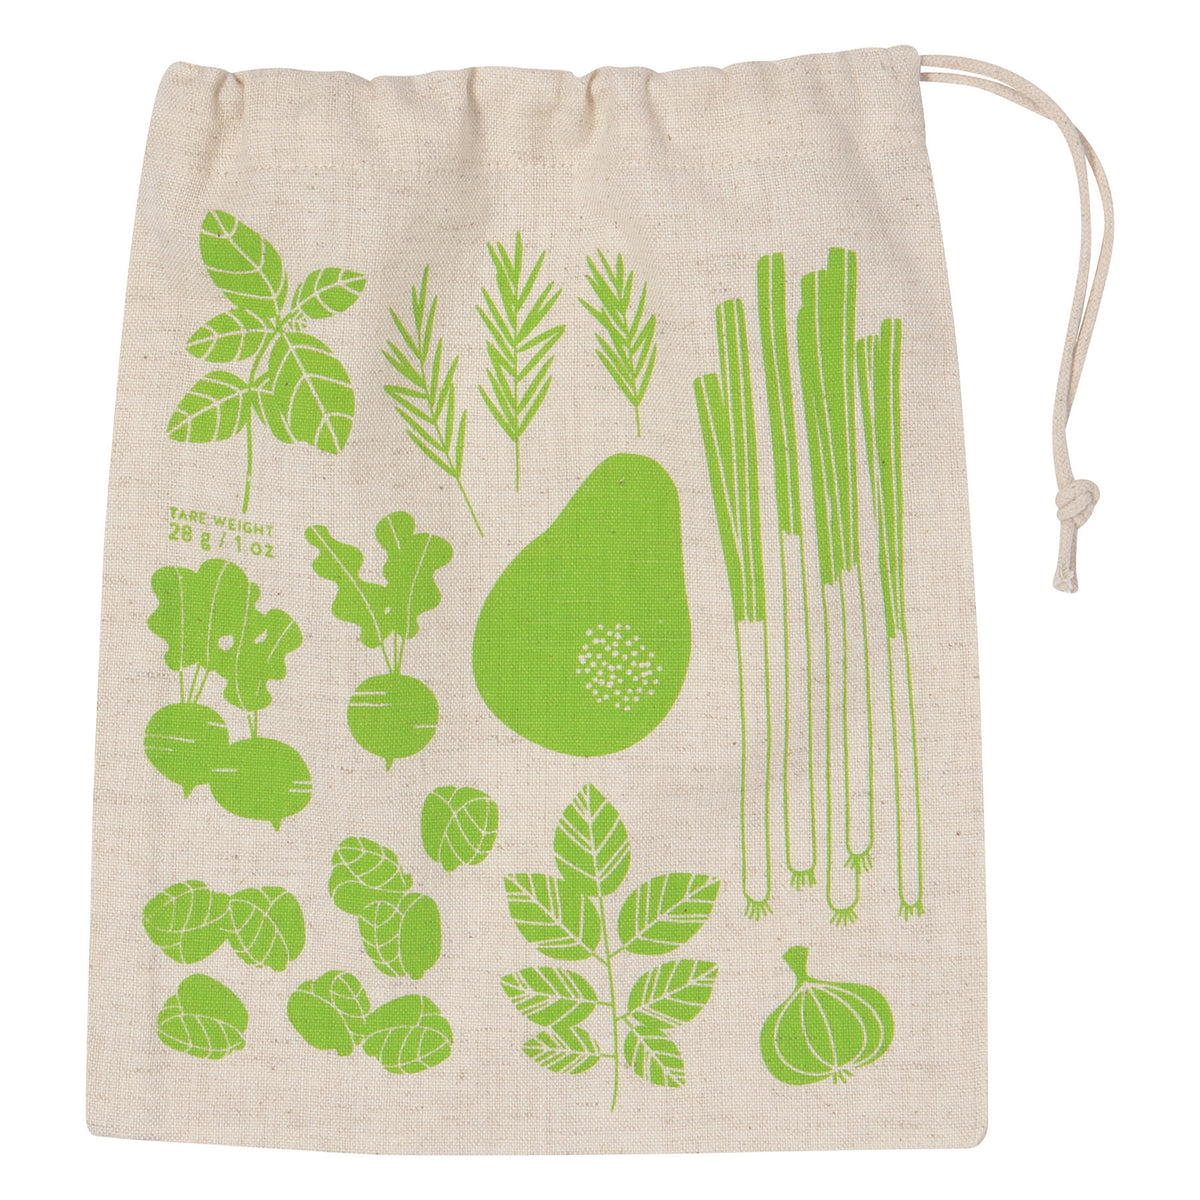 Veggies Produce Bags, Set of 3